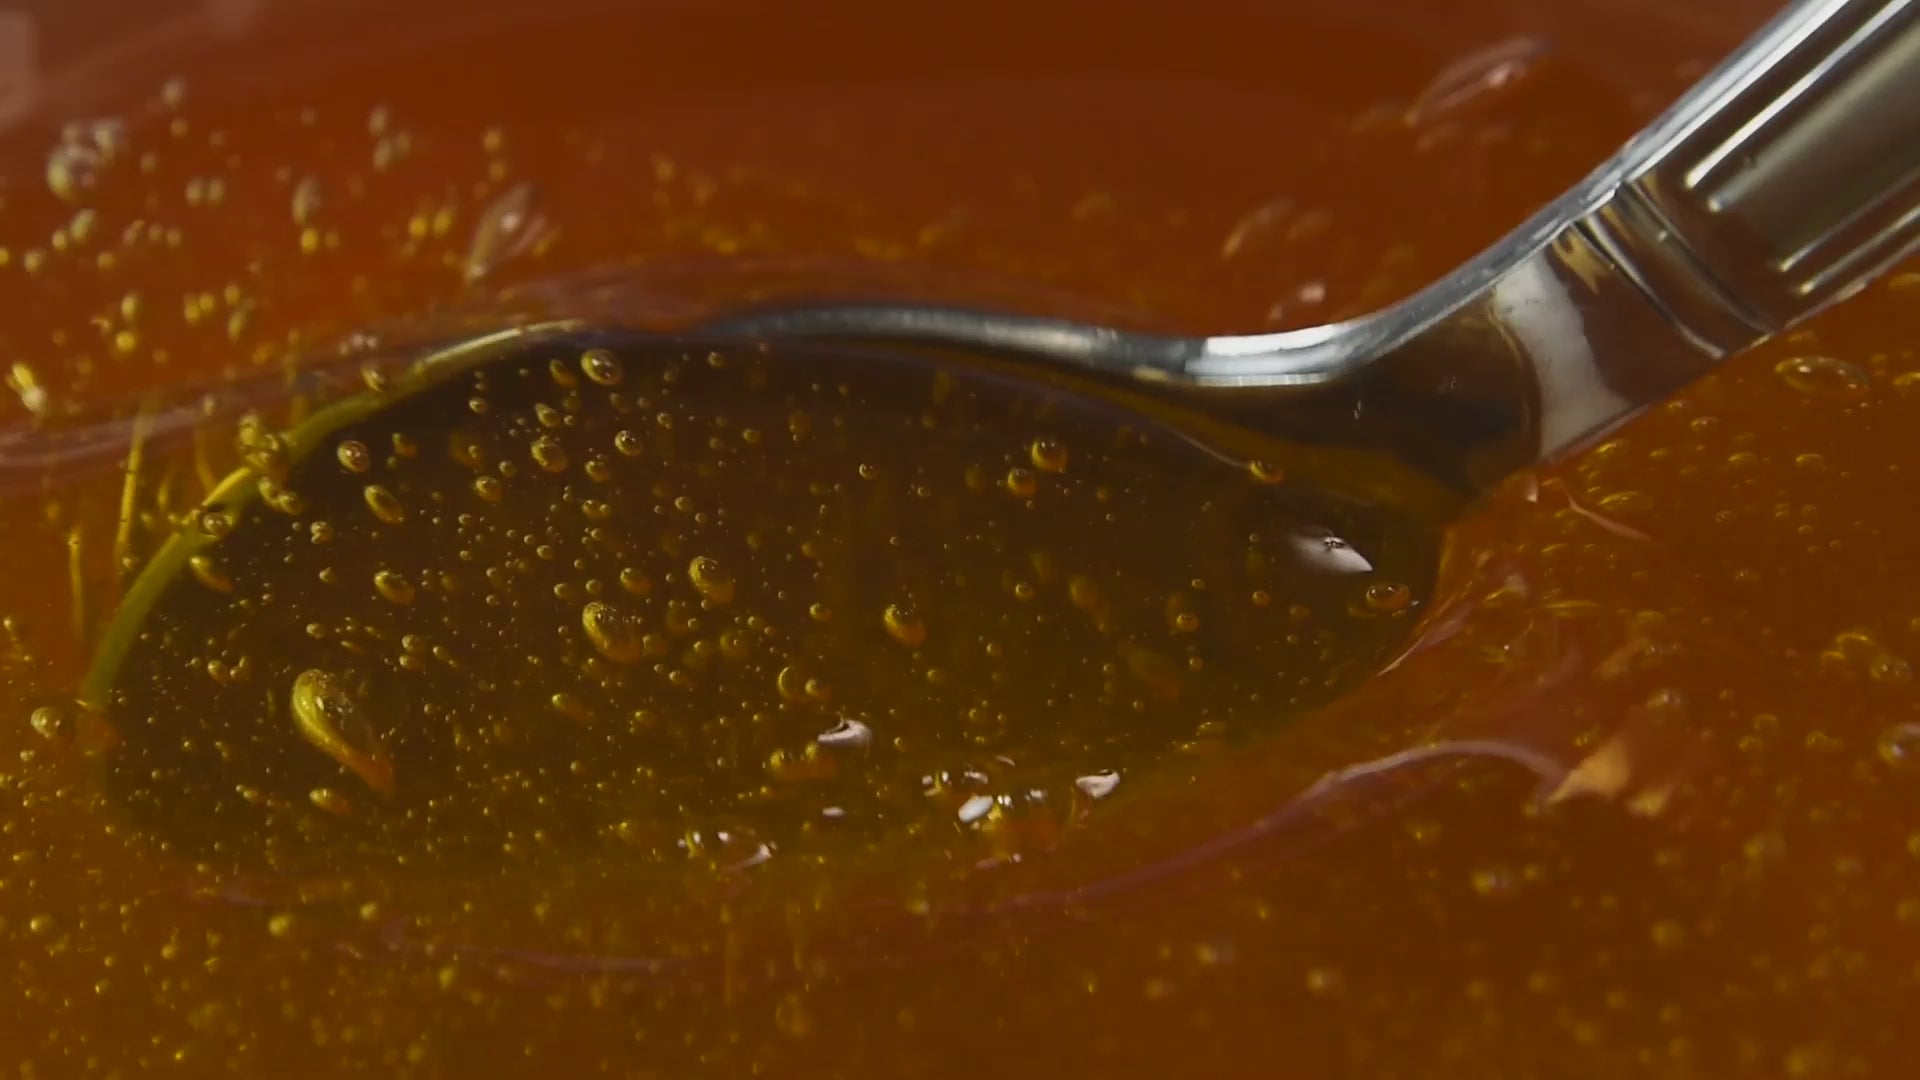 Load video: liquid honey